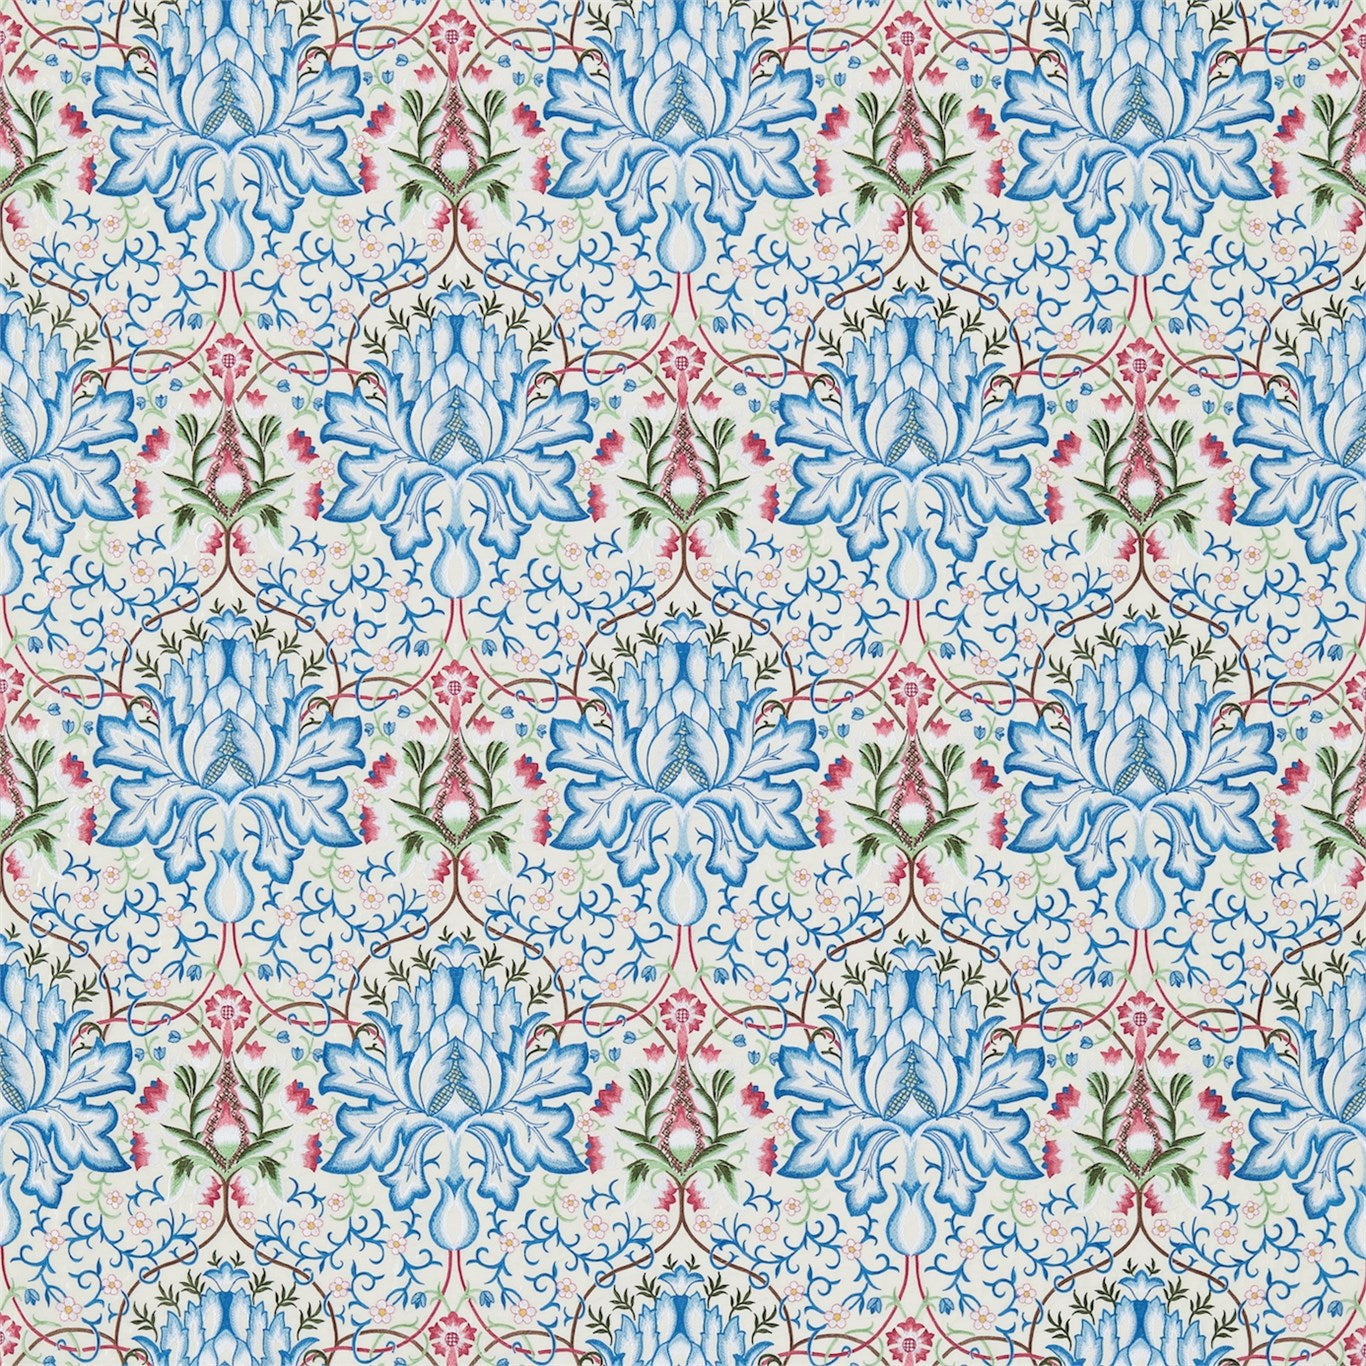 Artichoke Embroidery Fabric by Morris & Co. - DMEM234545 - Peacock/Cream